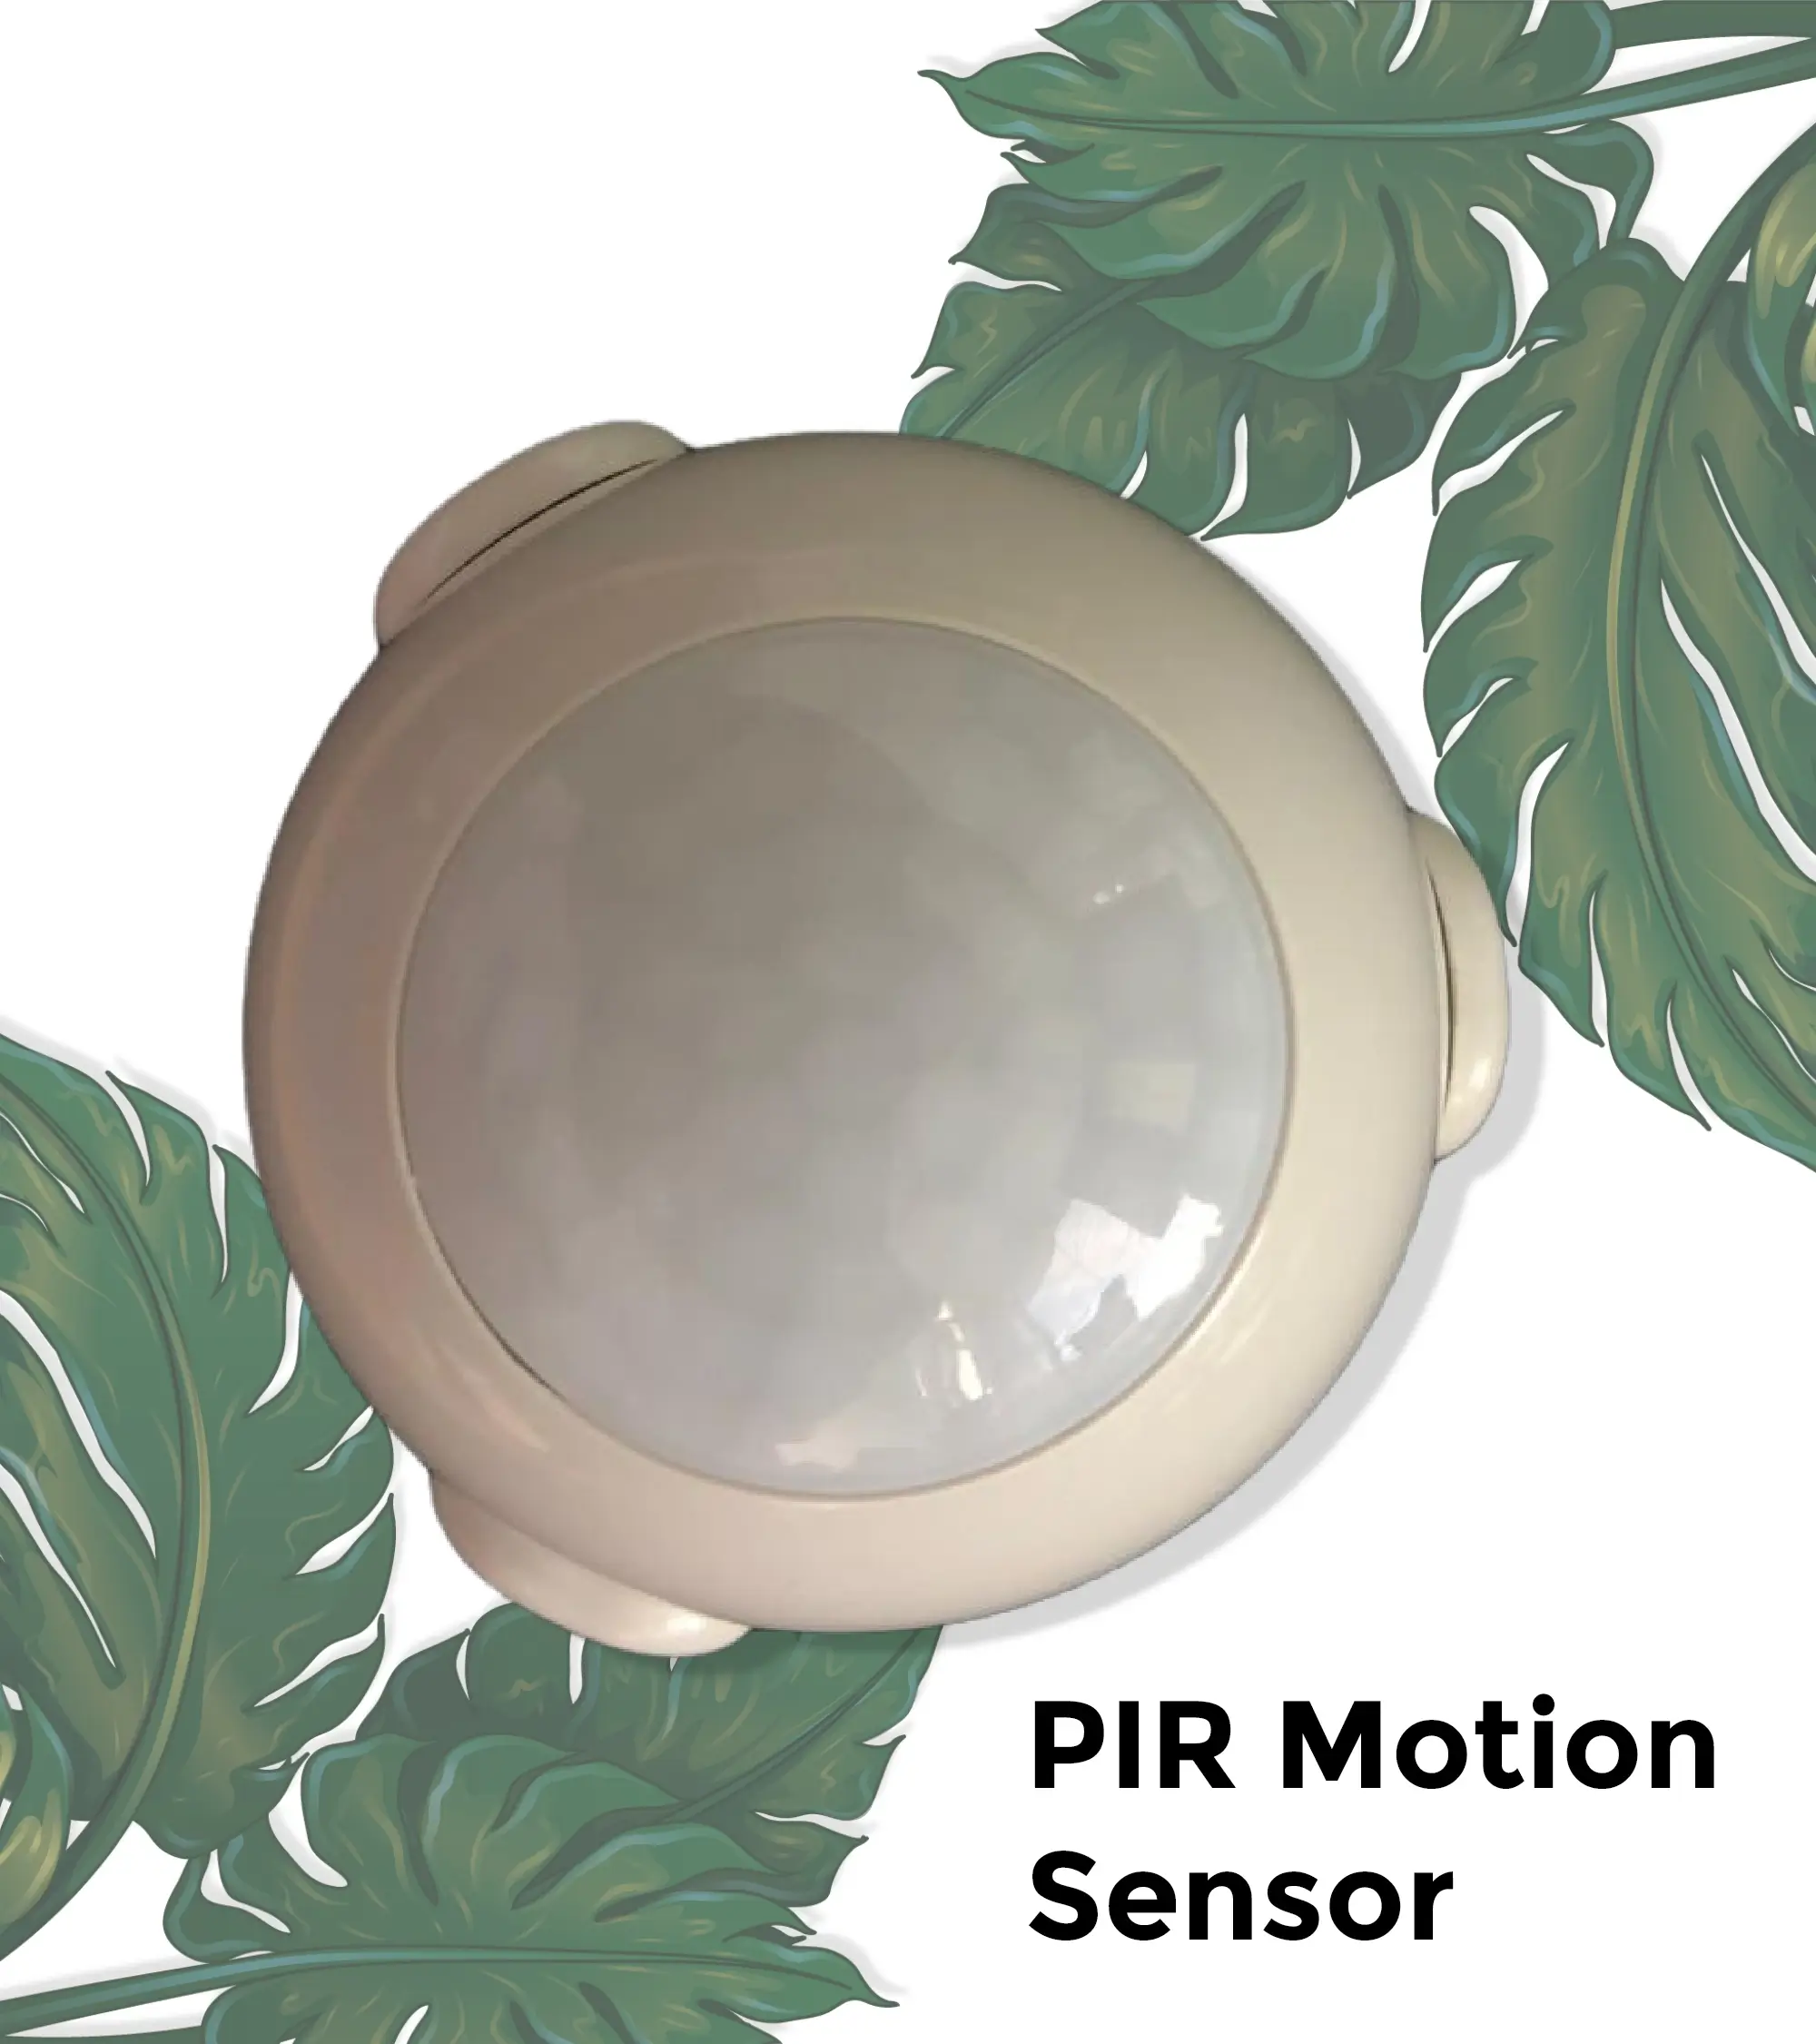 PIR Motion Sensor